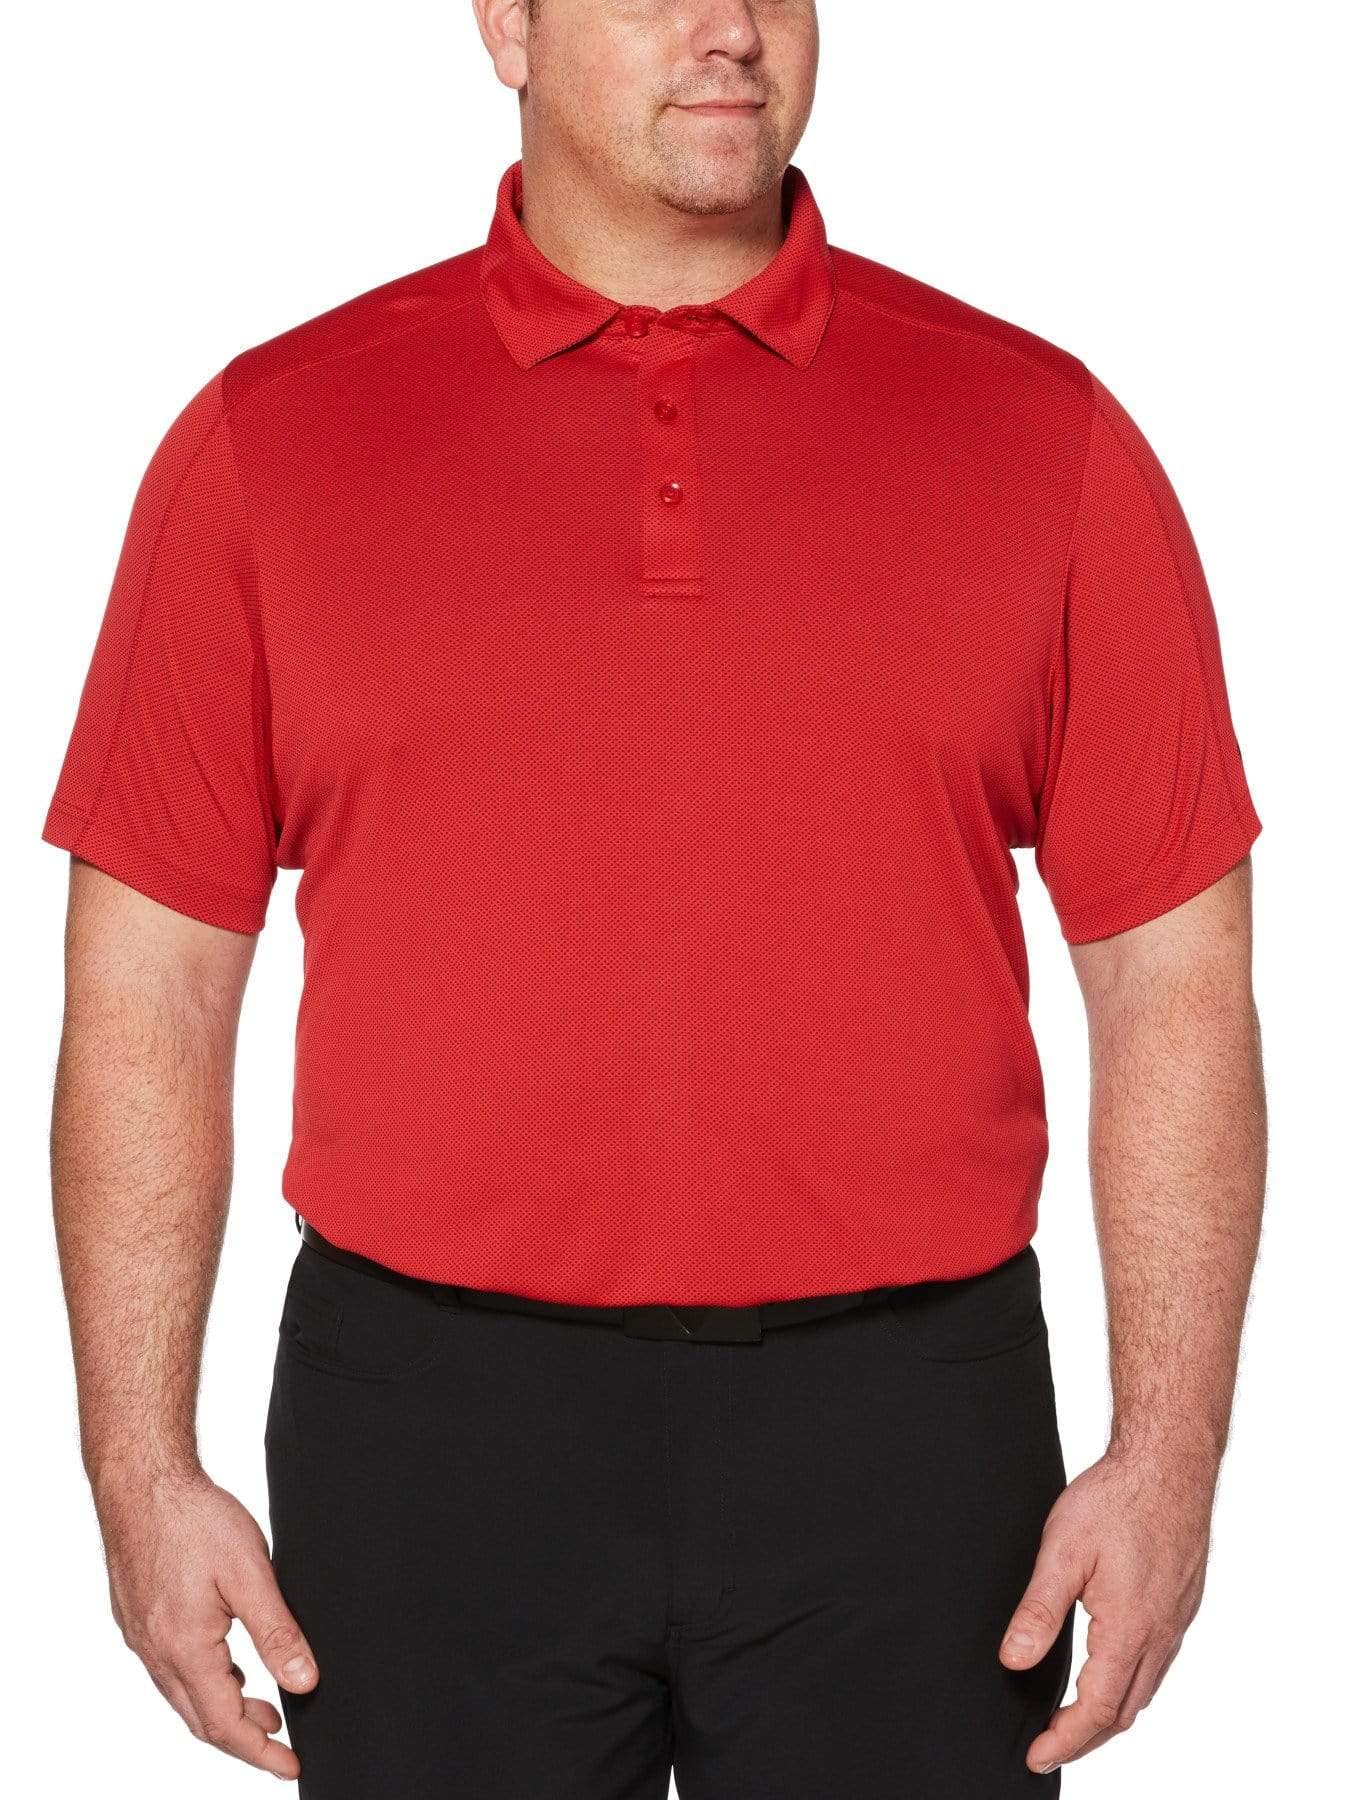 Callaway Men's Swing Tech Short Sleeve Golf Polo Shirt, Tango Red (XXL Big)  $15.90 + Free Shipping w/ Prime or on $35+